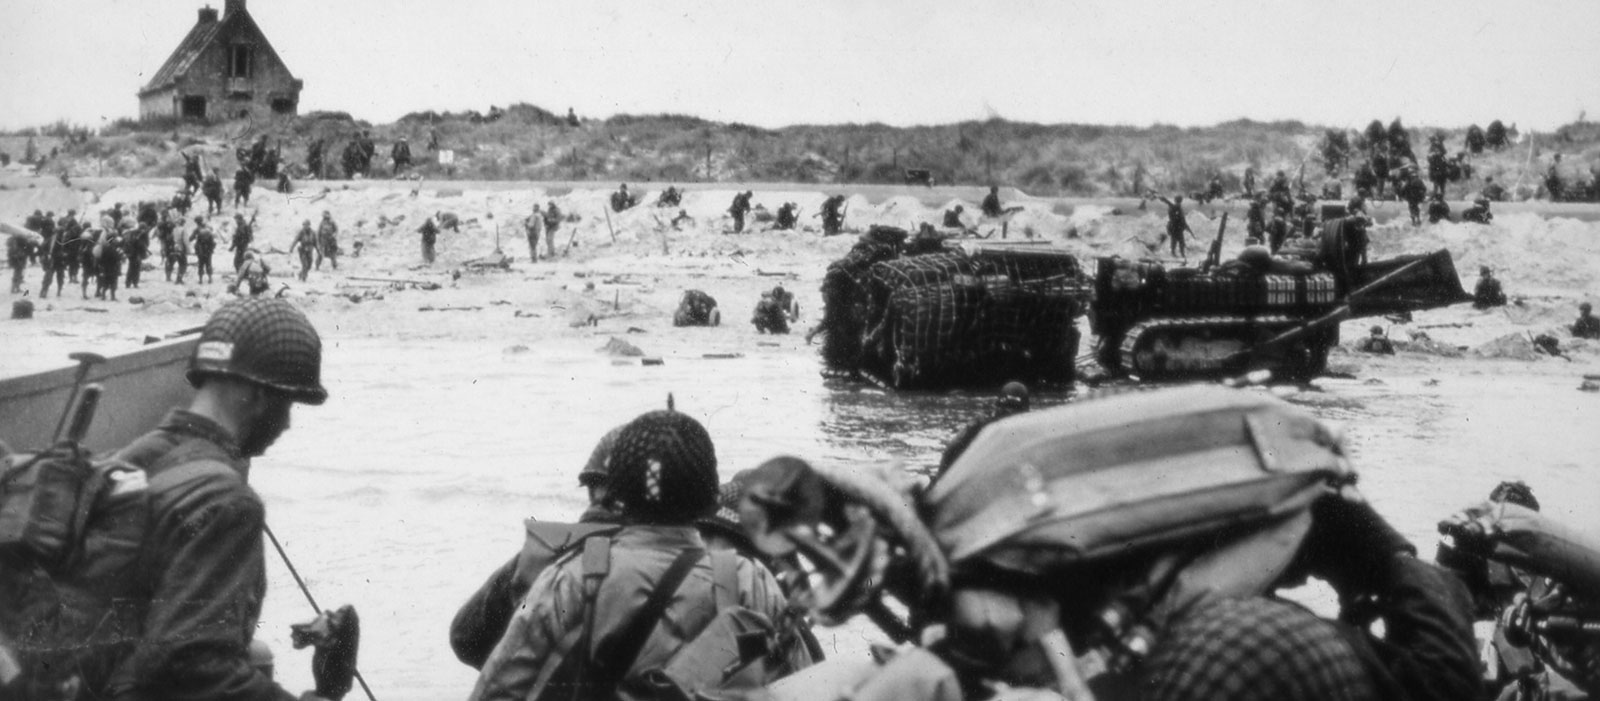 The D-Day Landing Beaches